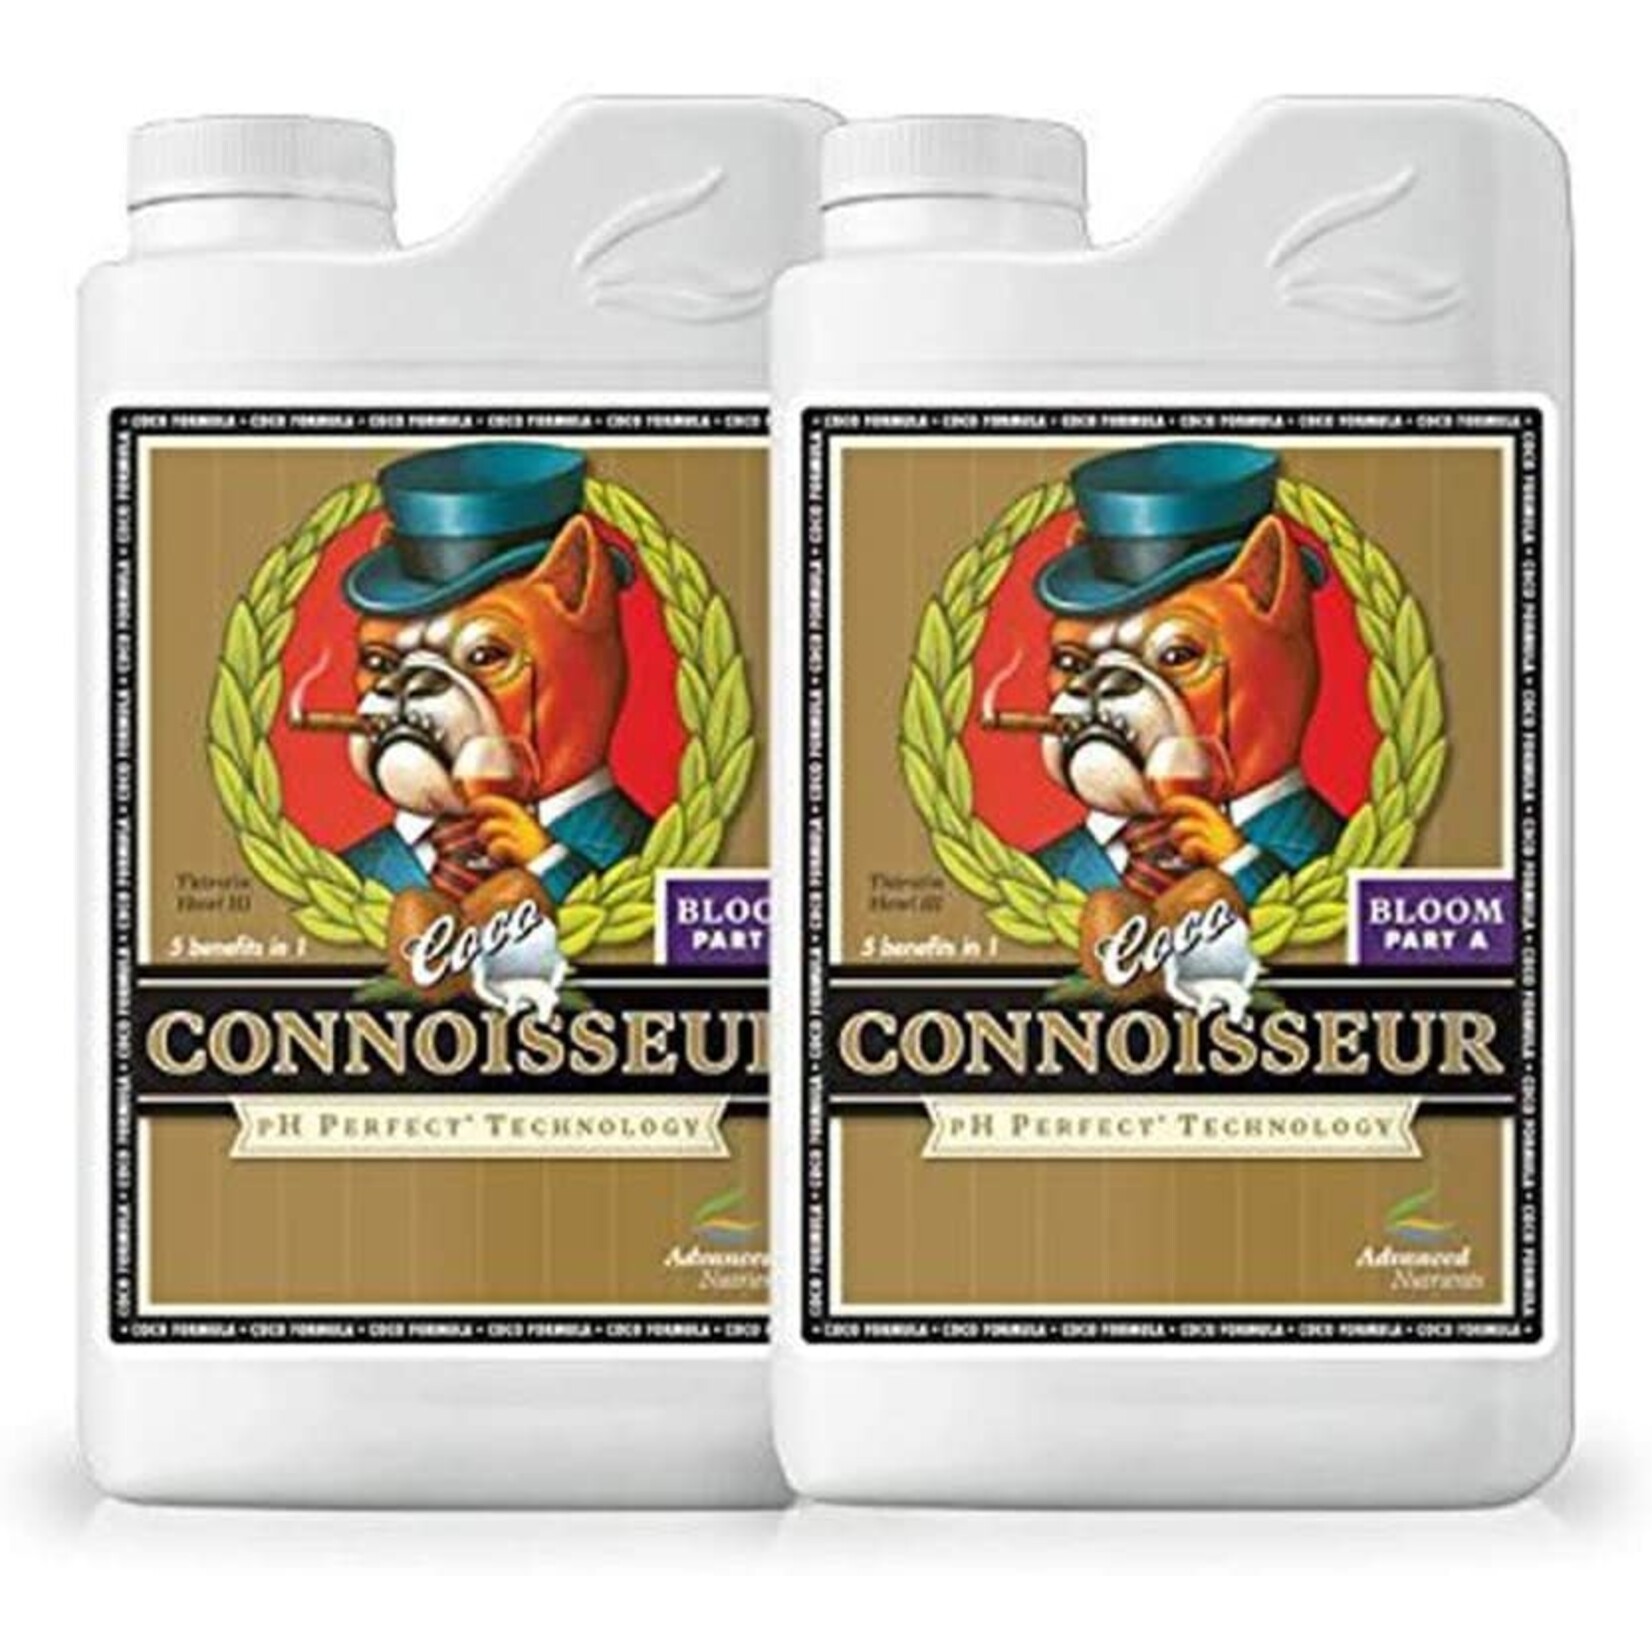 Advanced Nutrients pH Perfect Connoisseur Coco Bloom Part A